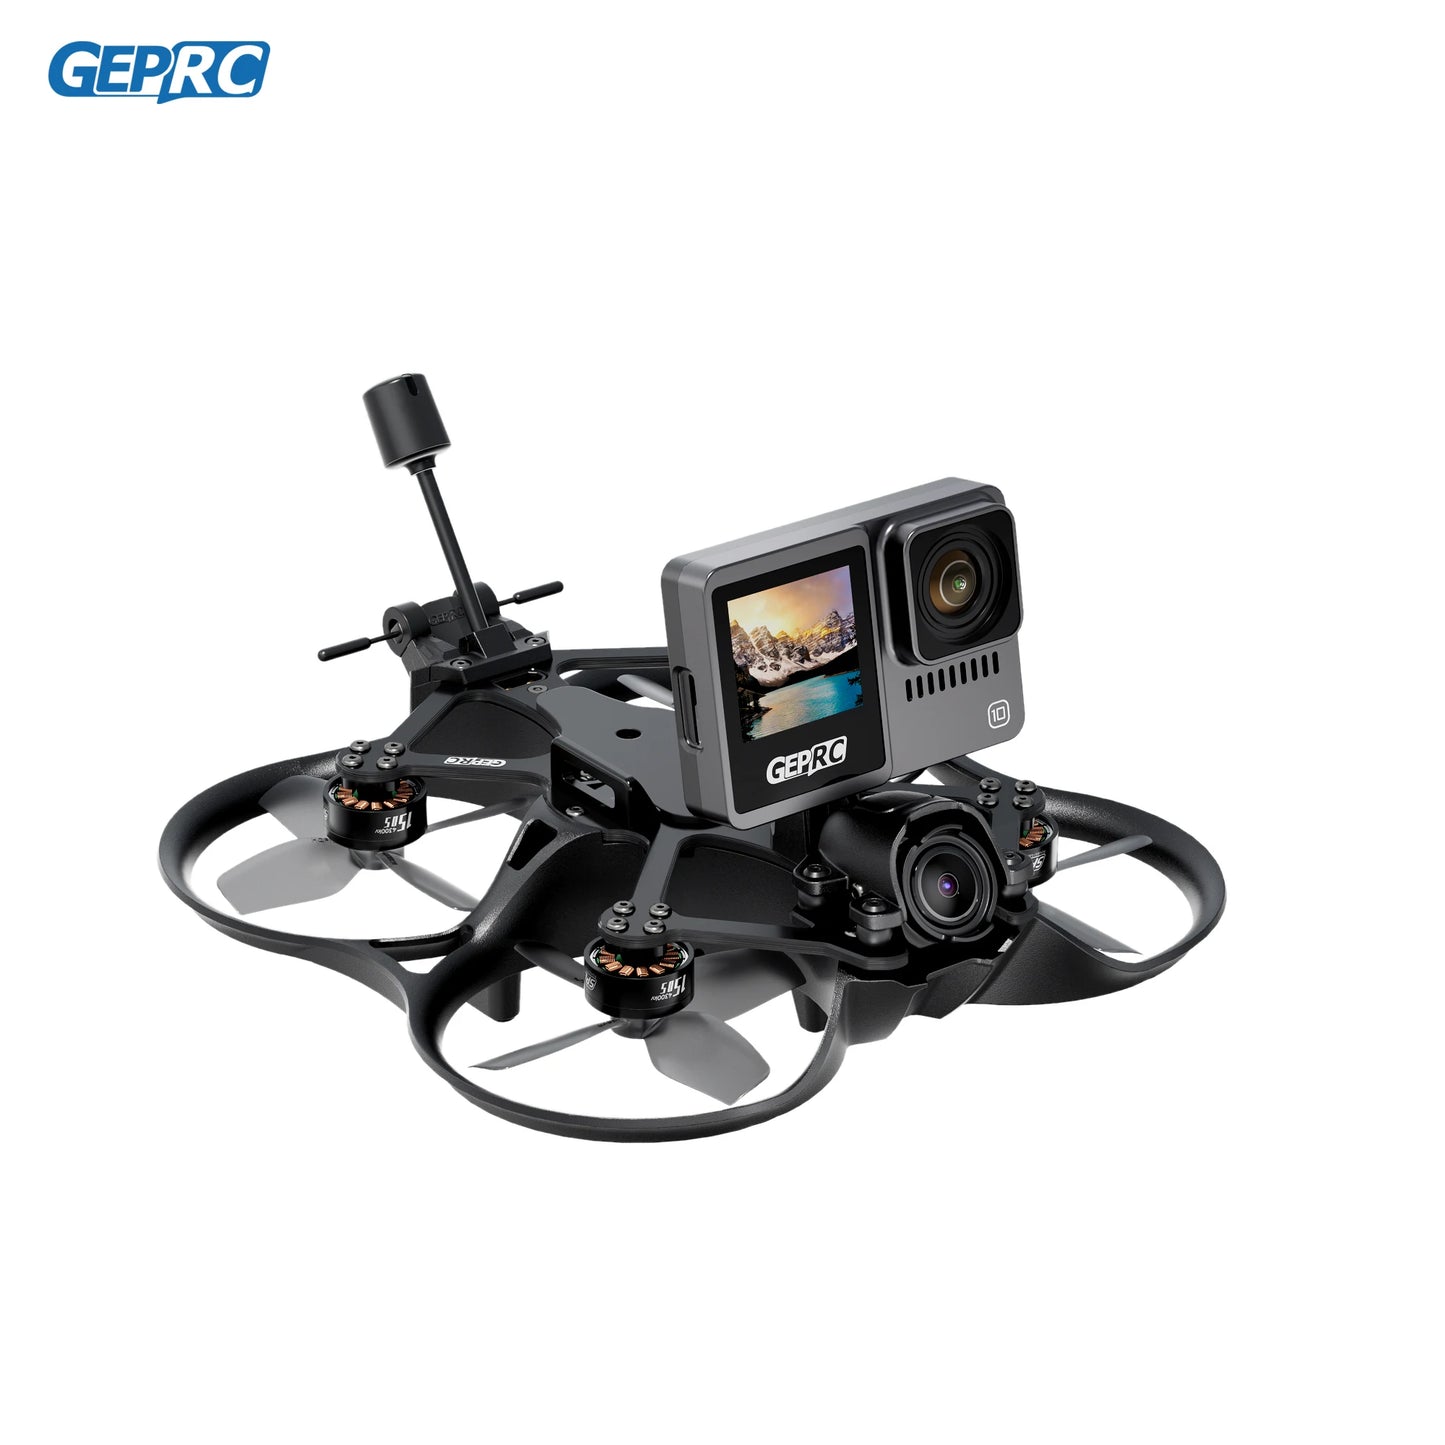 GEPRC Cinebot25 S HD O3 2.5inch FPV Drone